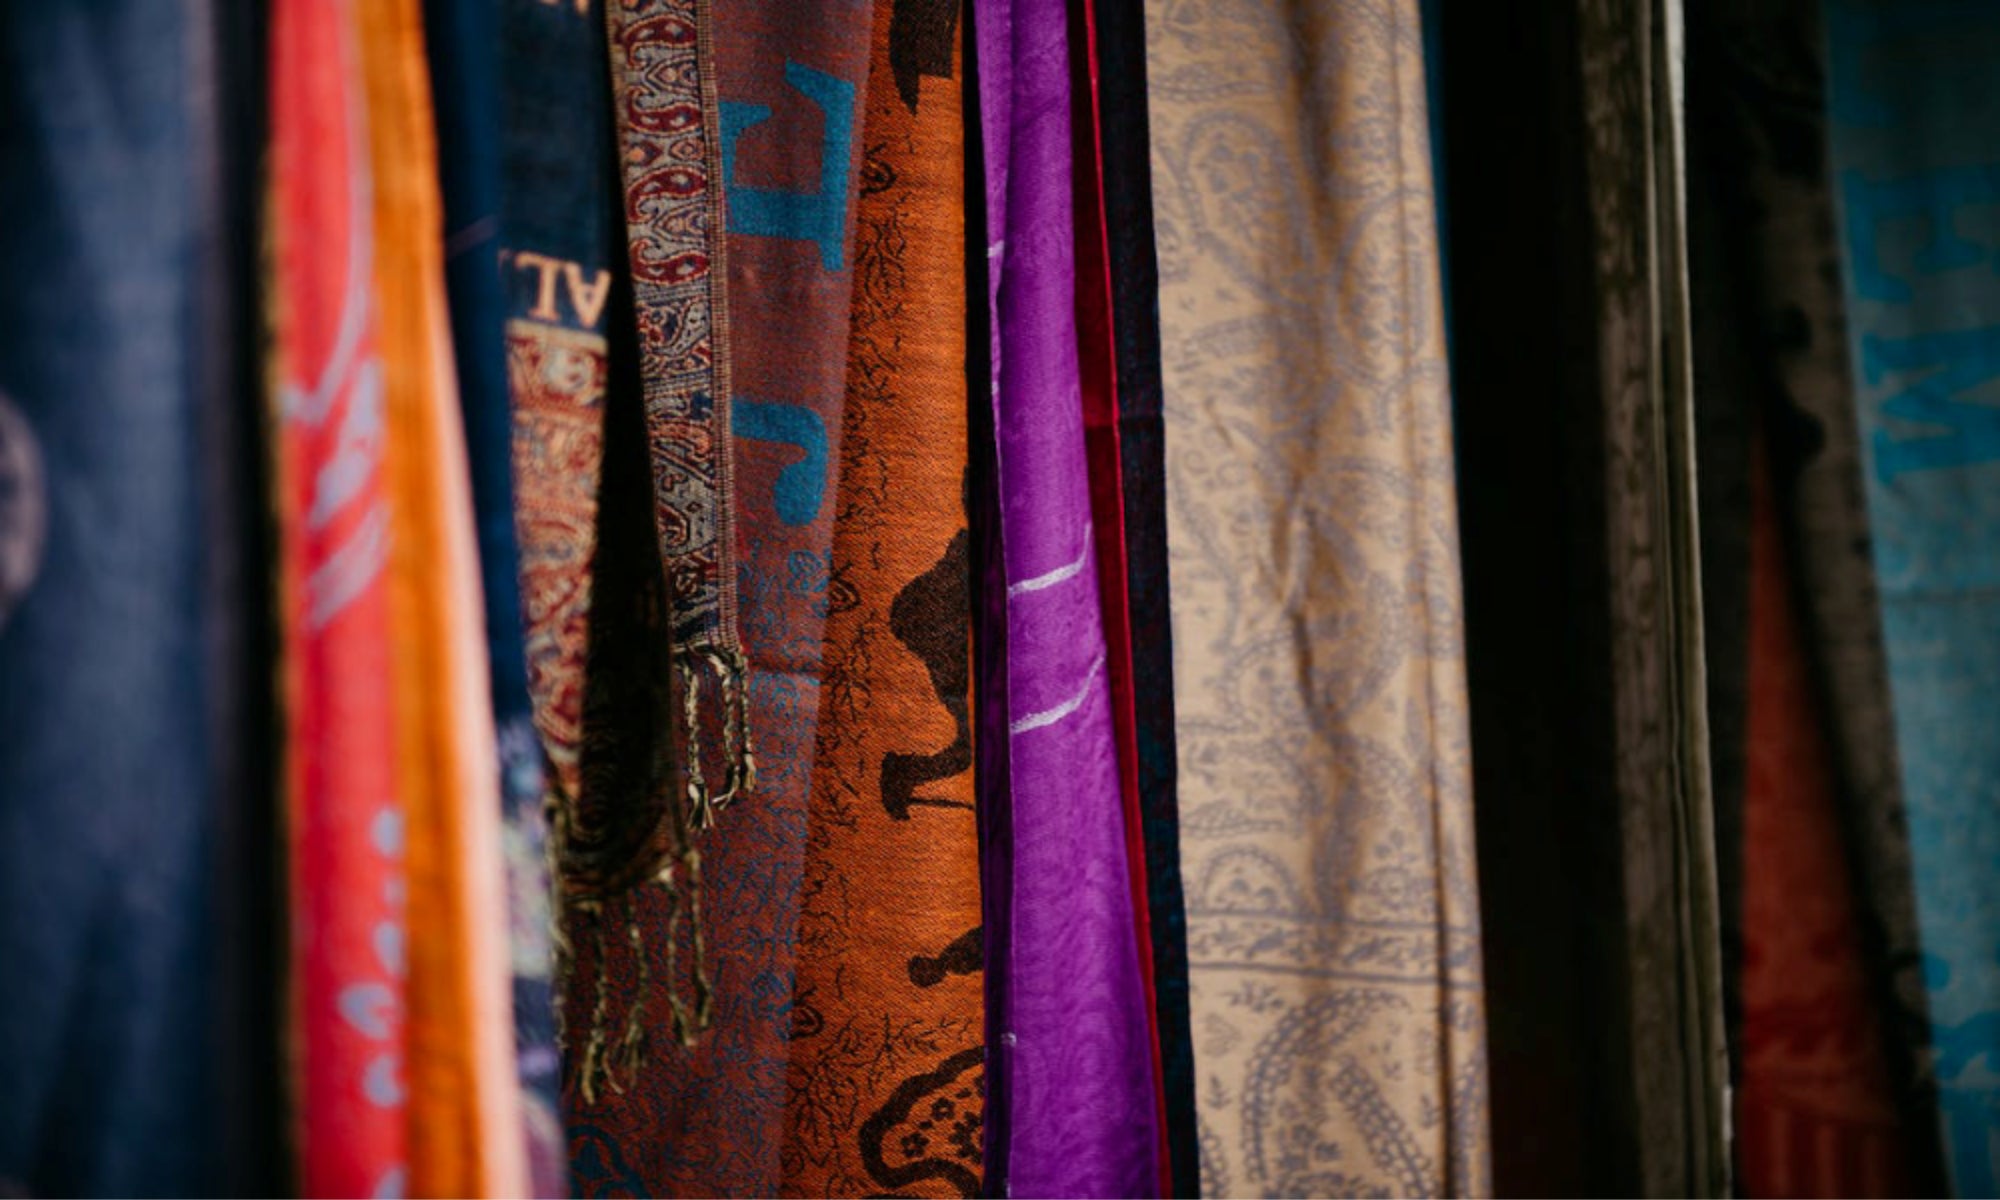 Sew Chic Interiors | Stockists of Designer Fabrics and Artisan Manufacturers | www.sewchicinteriors.co.uk 